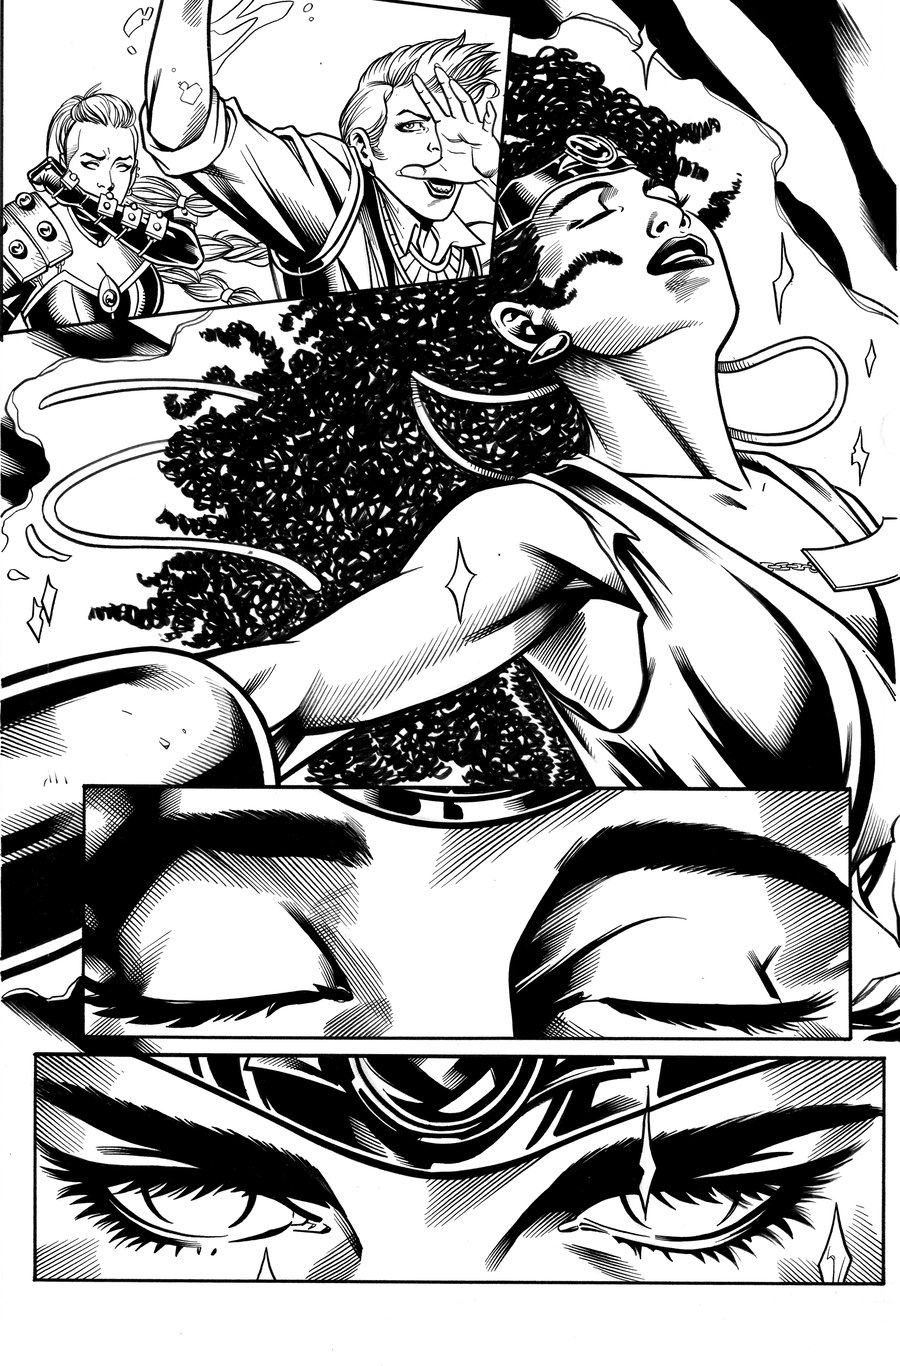 Image of Immortal Wonder Woman: Nubia (2021) #2 PG 32